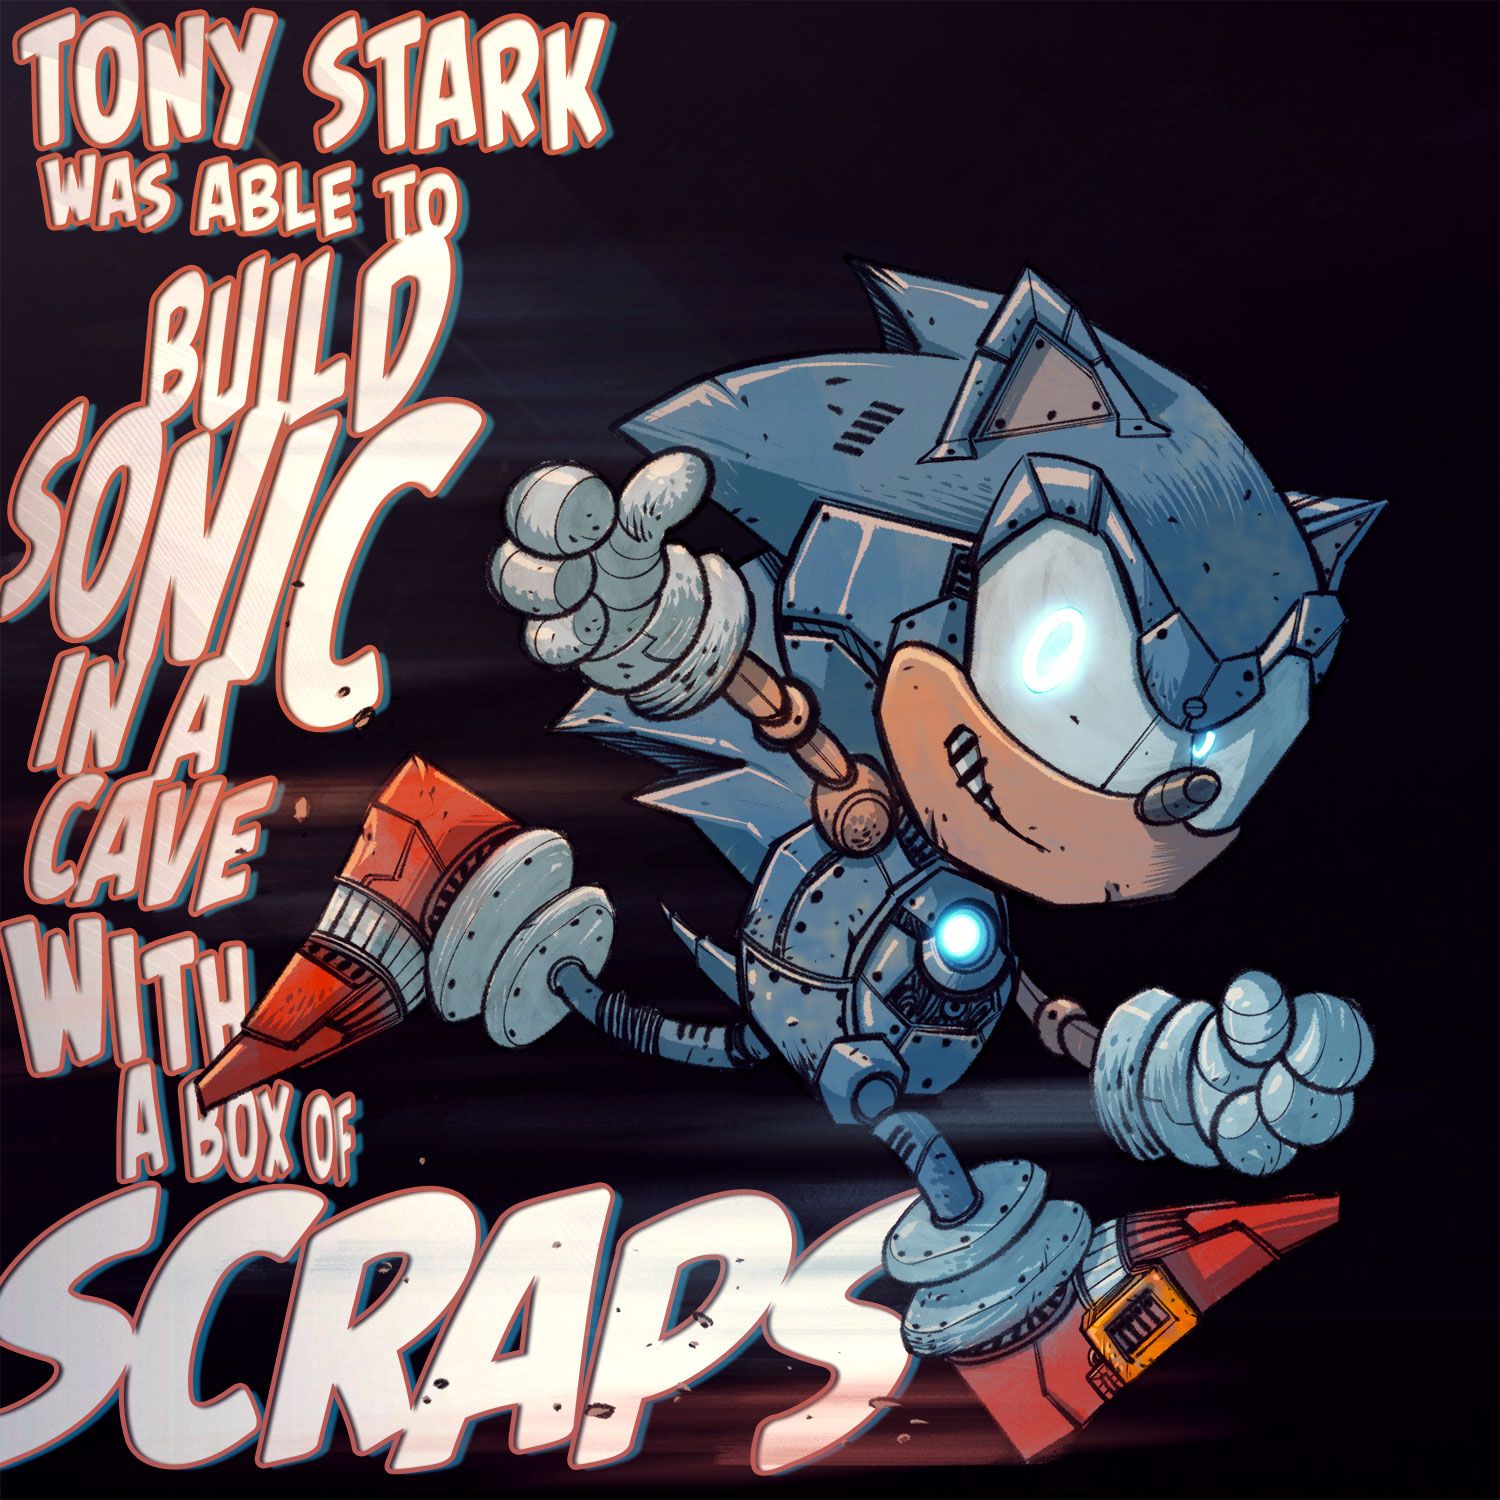 Sonic as Iron man